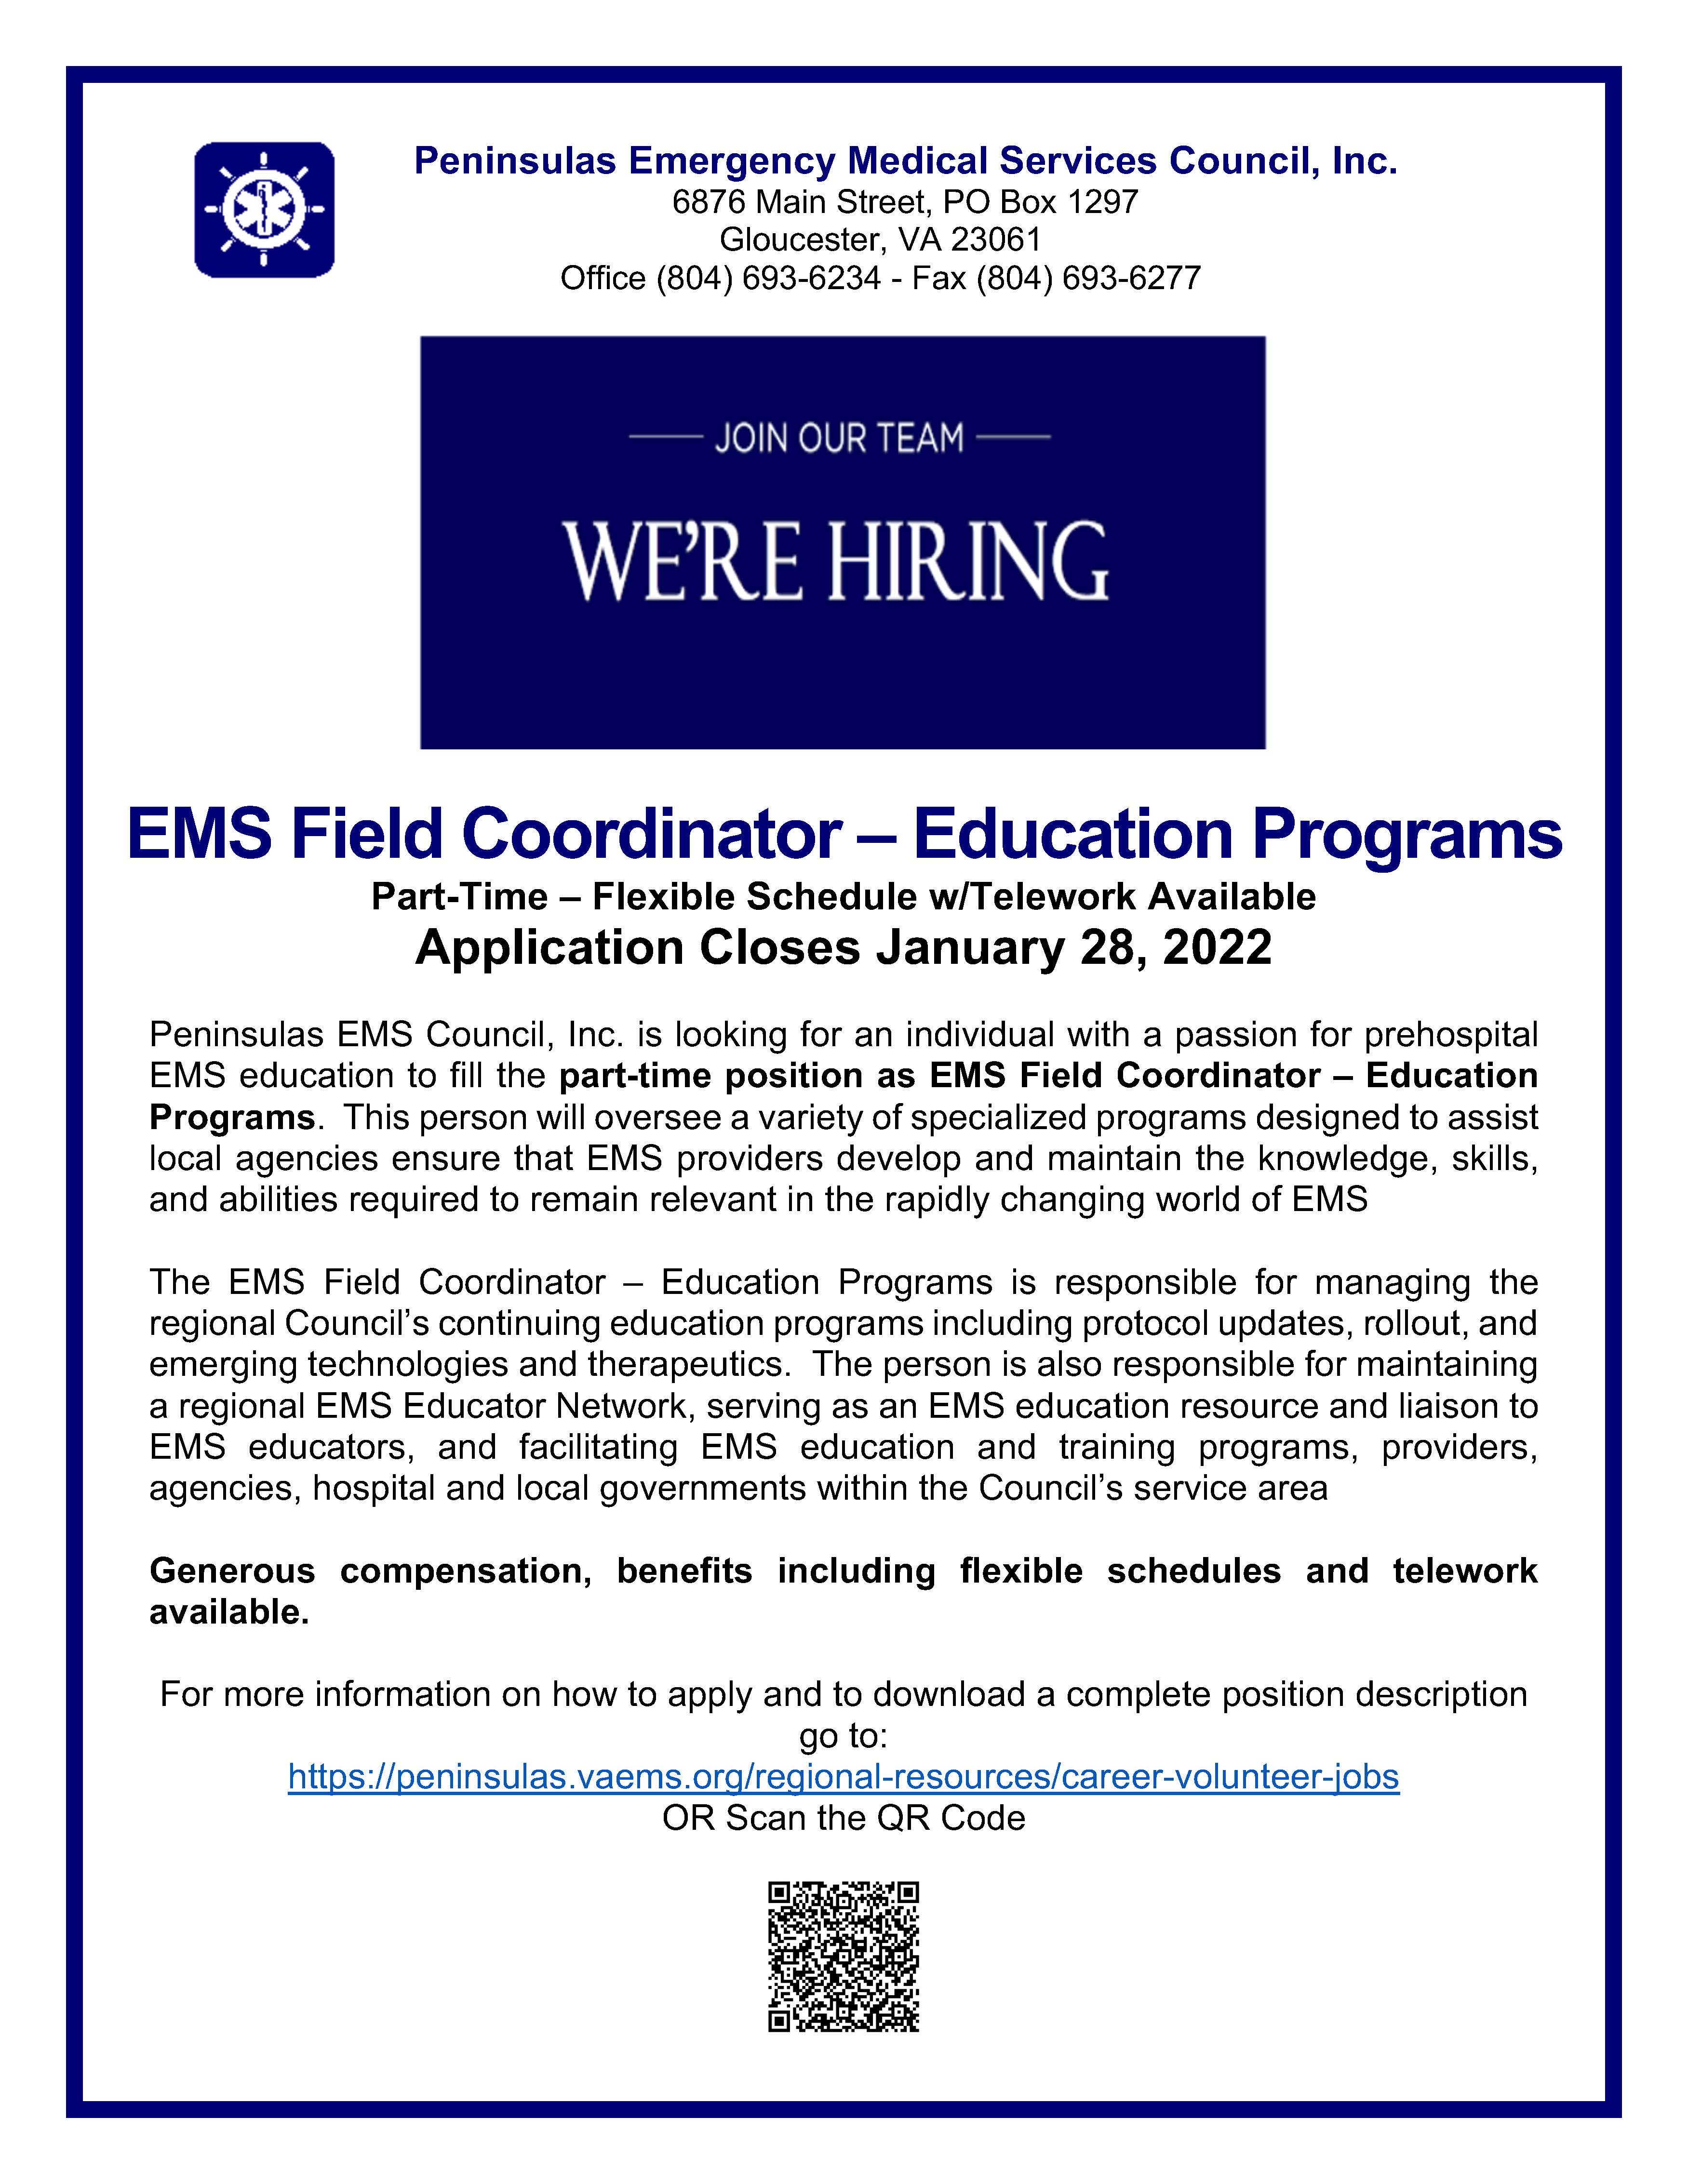 EMS Field Coordinator Education Programs Job Flyer Final